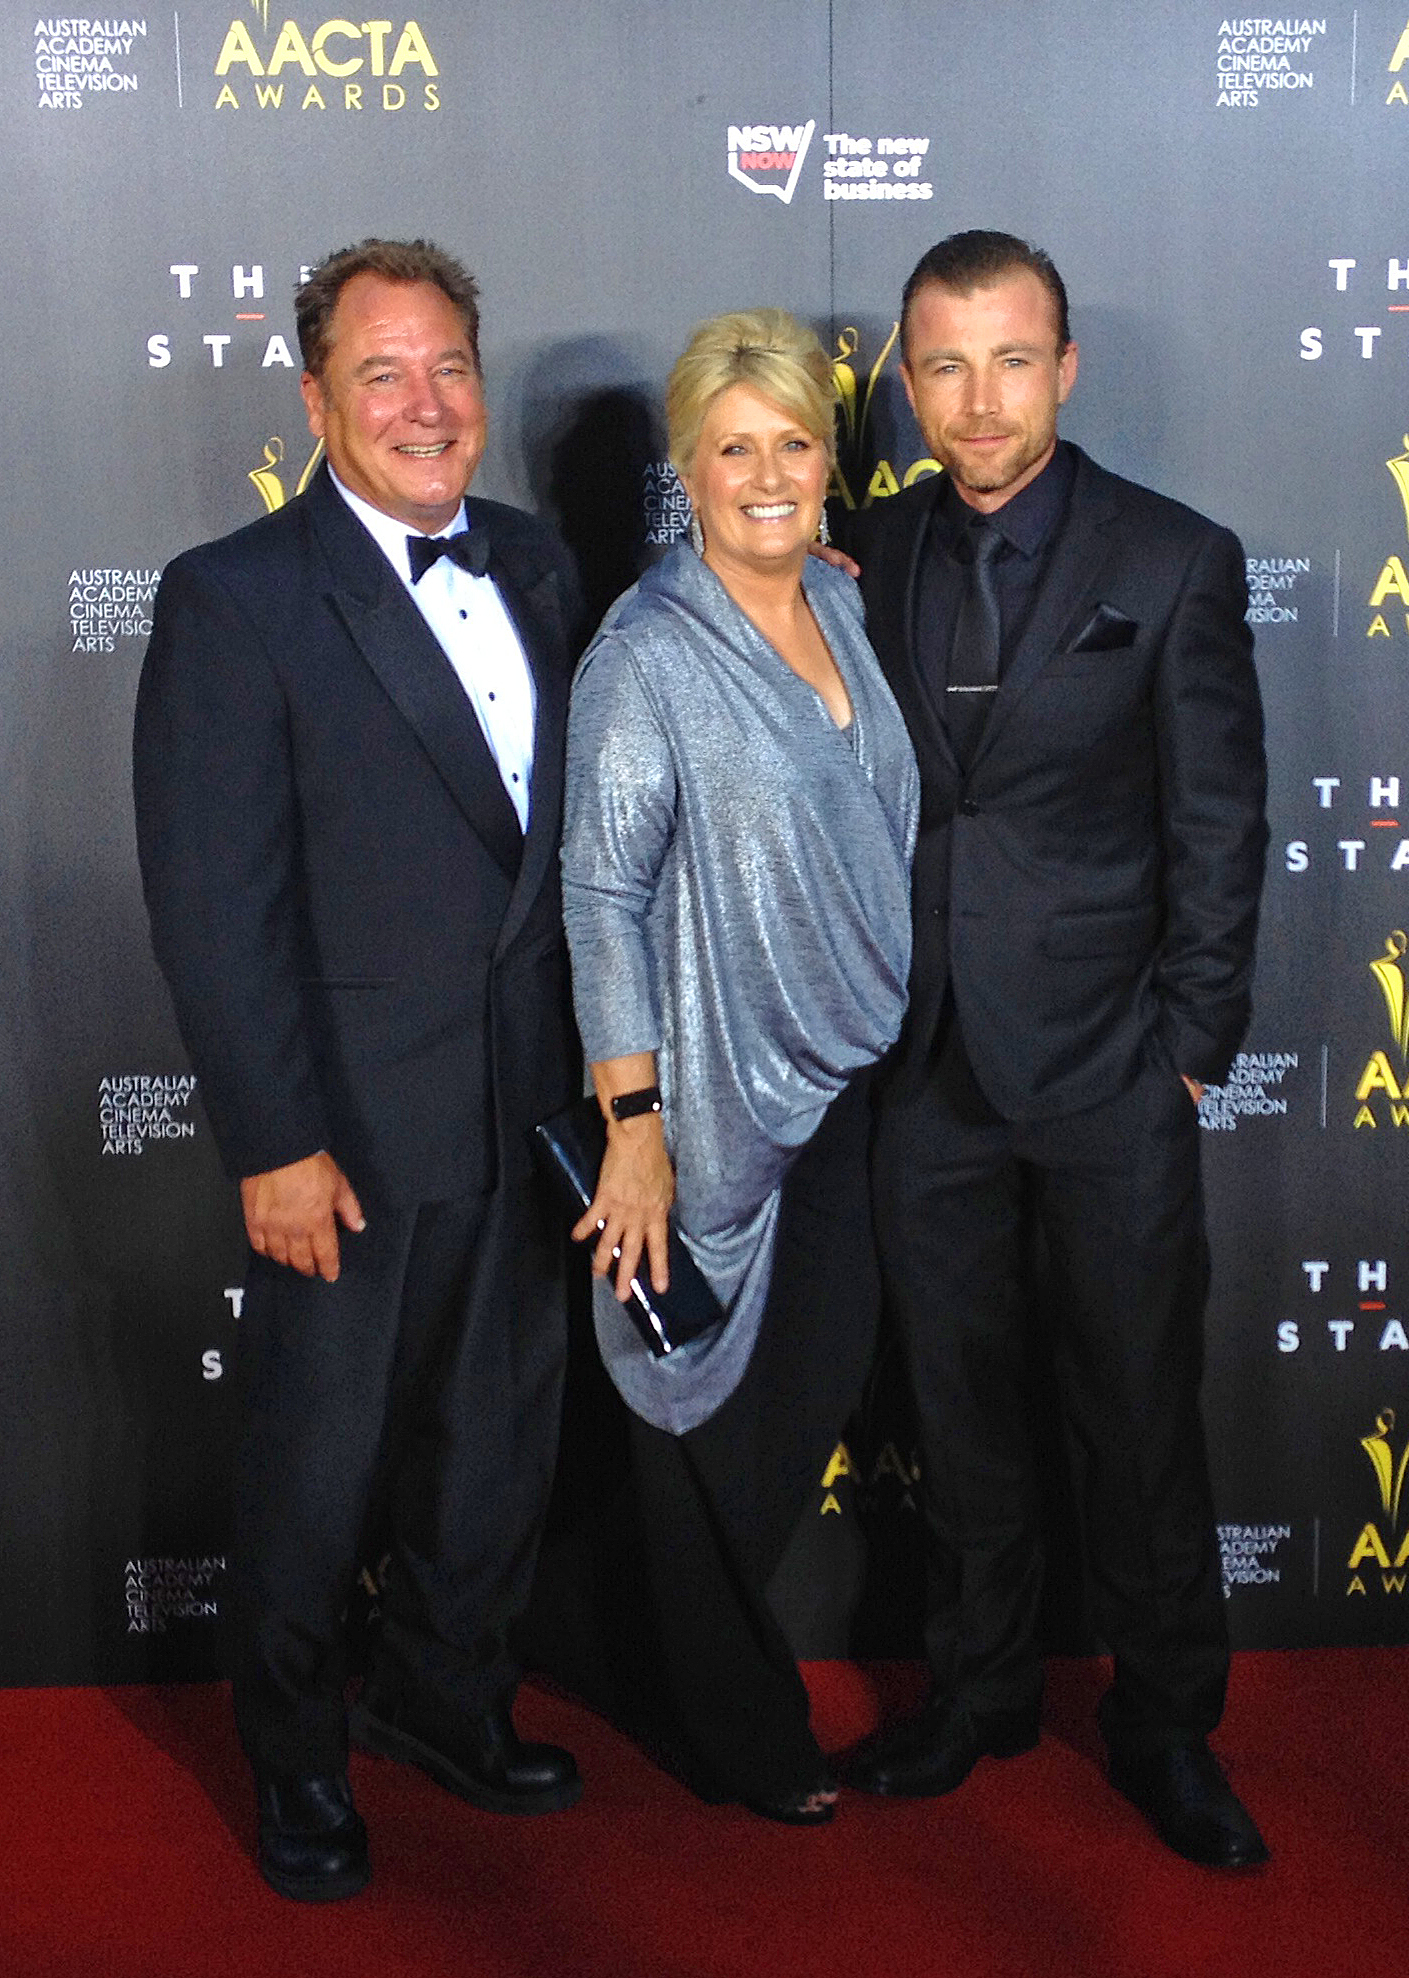 2014 AACTA Awards - Jeremy Kewley, Debra Byrne, Richard Cawthorne - (FAT TONY & CO)